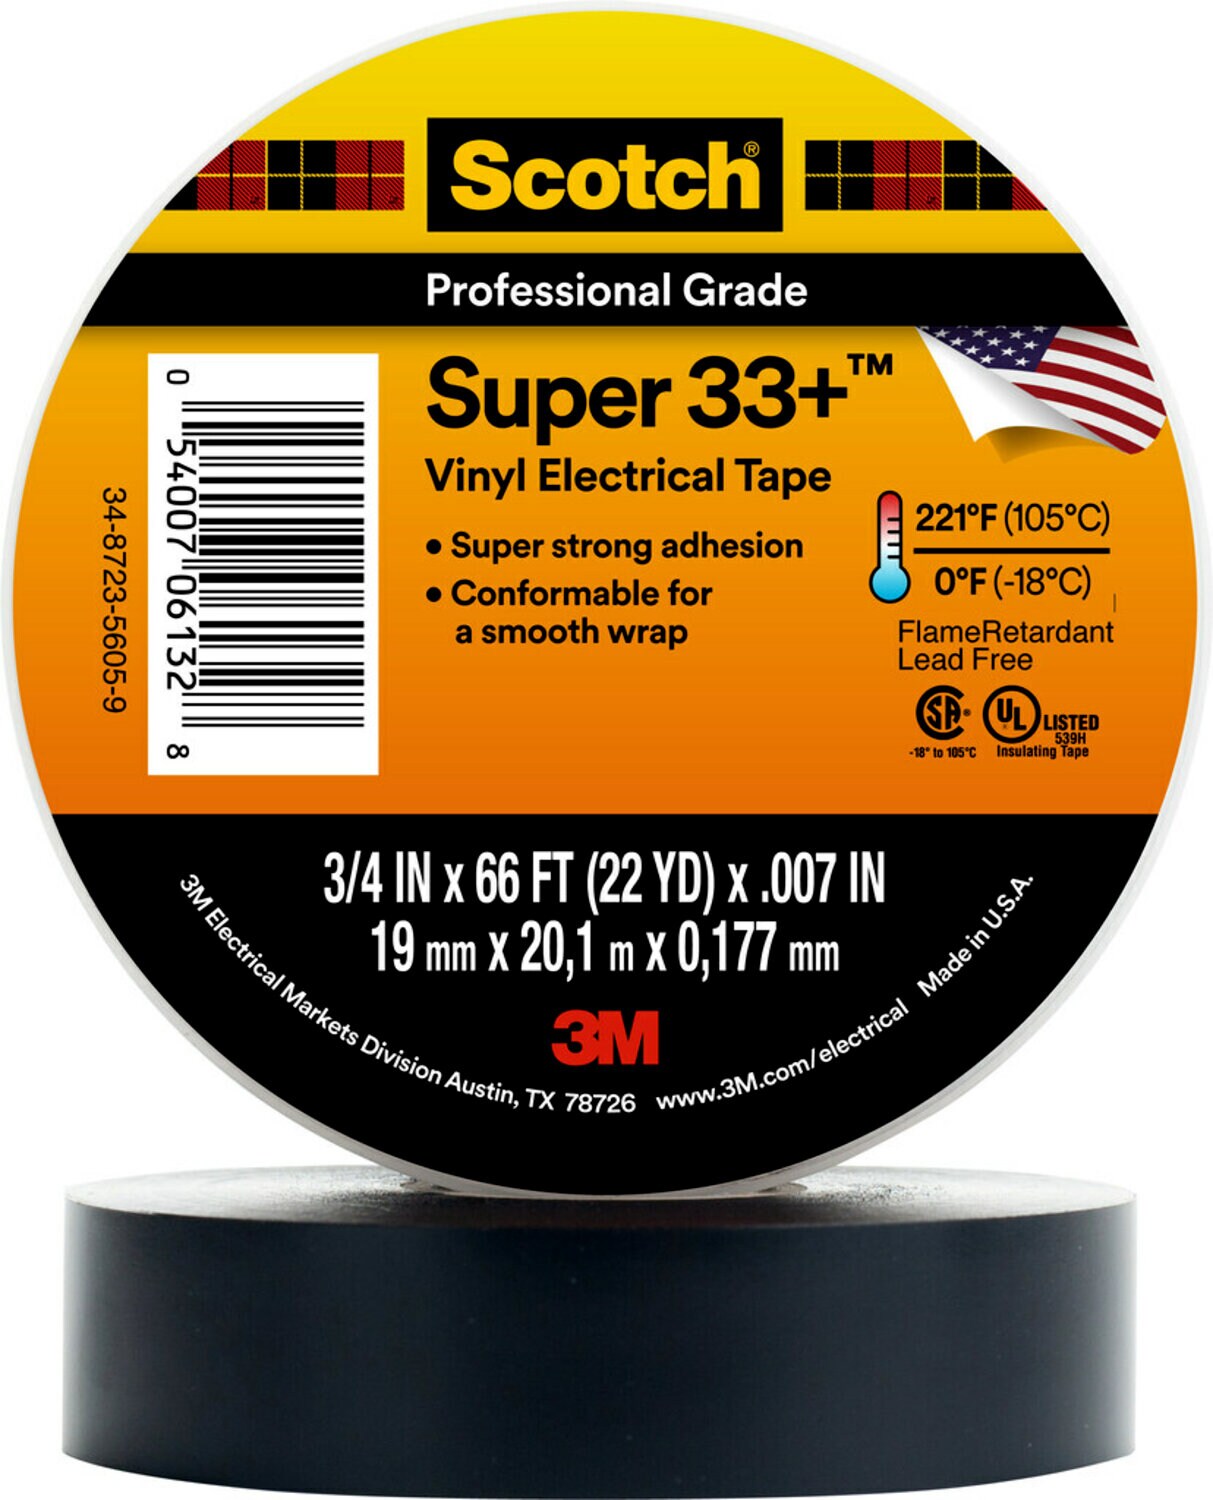 7100123703 - Scotch Super 33+ Vinyl Electrical Tape, Configurable